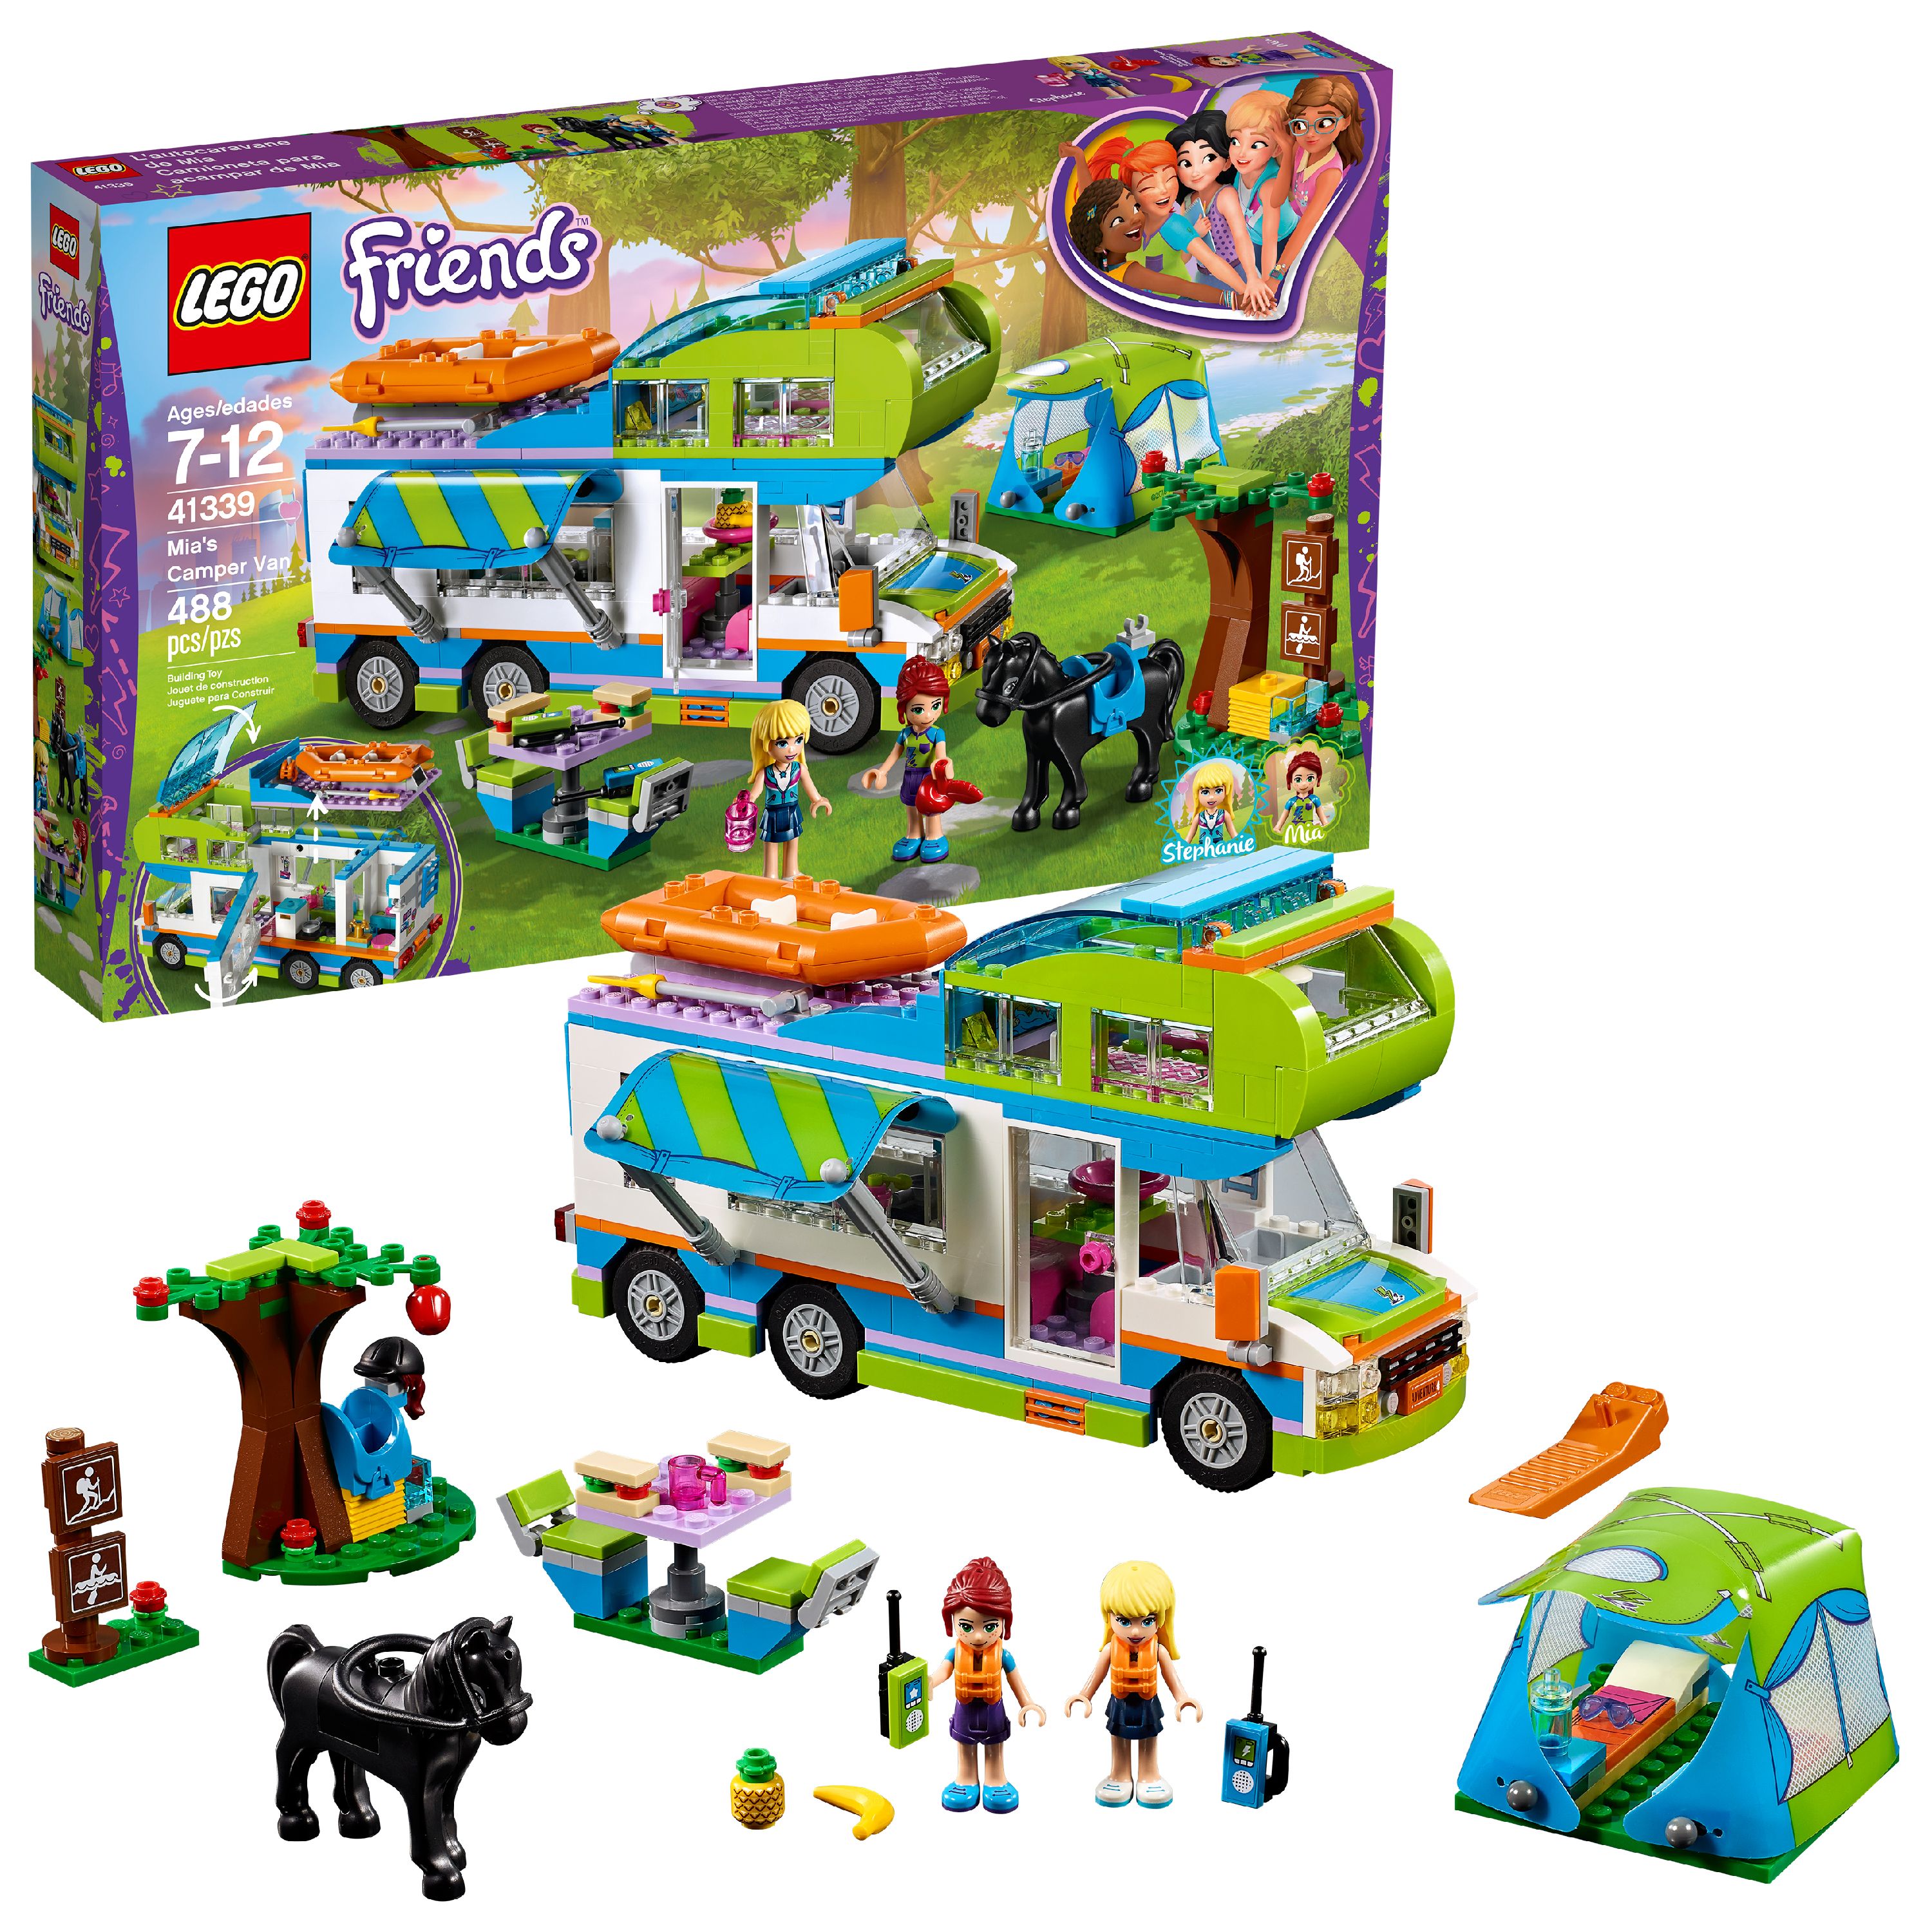 LEGO Friends Mia's Camper Van 41339 Building Set (488 Pieces) - image 1 of 7